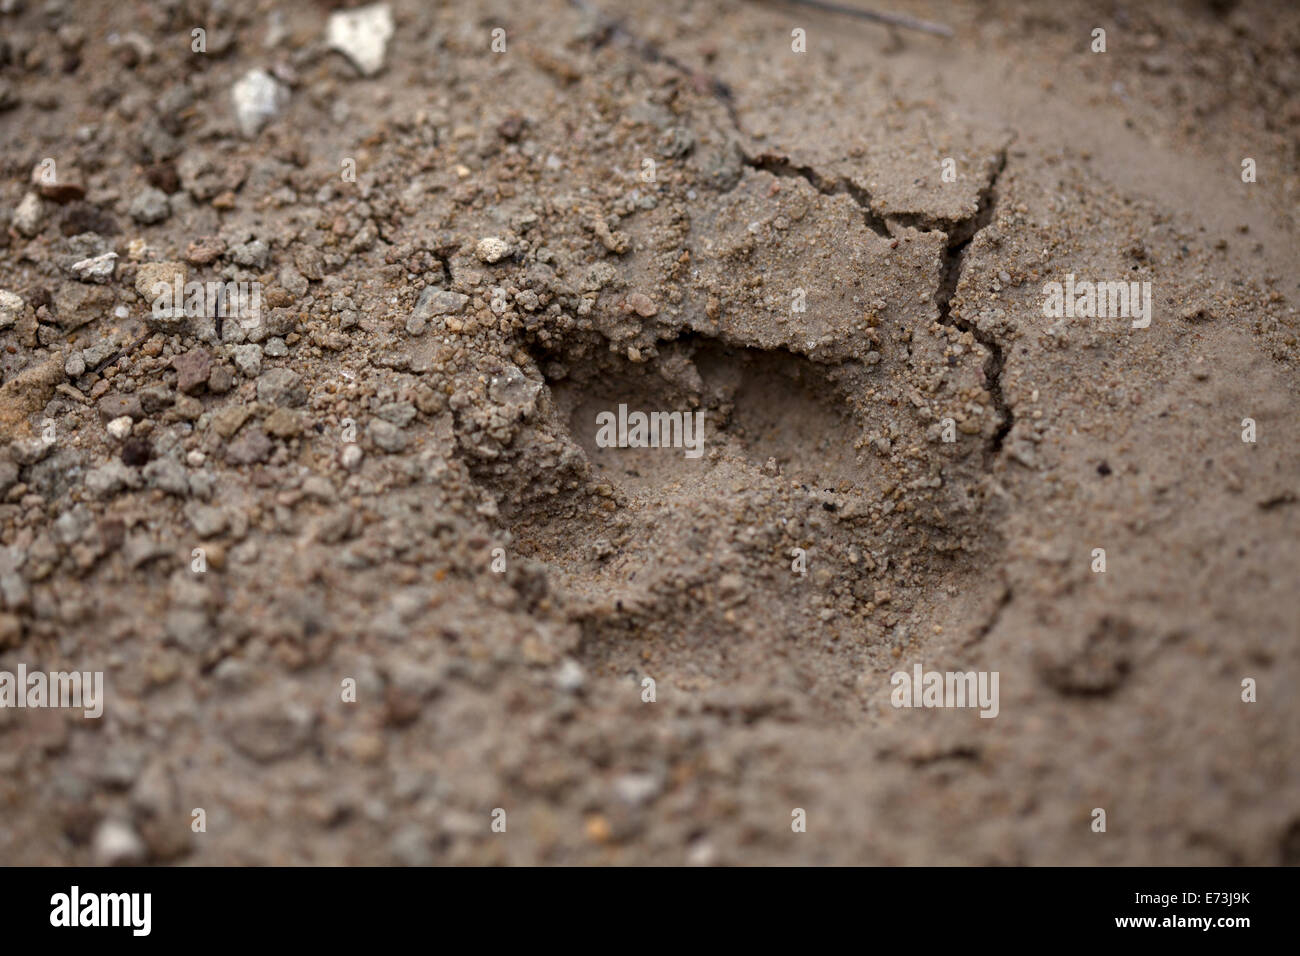 La huella de un zorro en San Sebastián Bernal, estado de Querétaro, México, 29 de julio de 2014. Foto de stock